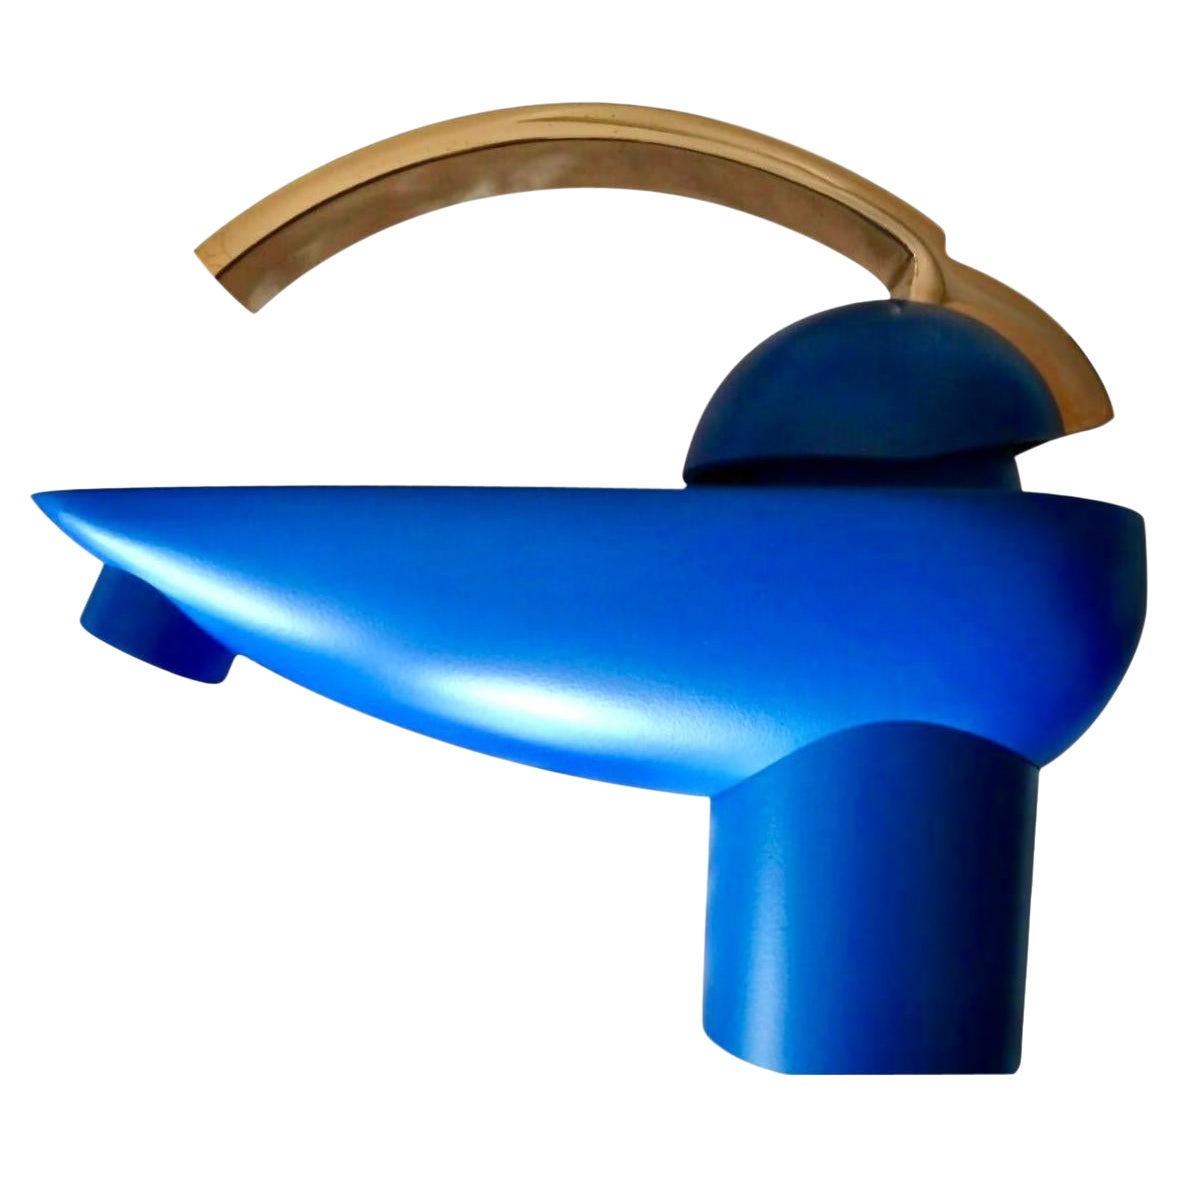 Dornbracht Obina Royal Blue, Gold Lavatory Single-Hole Deckmount Faucet, 1990s